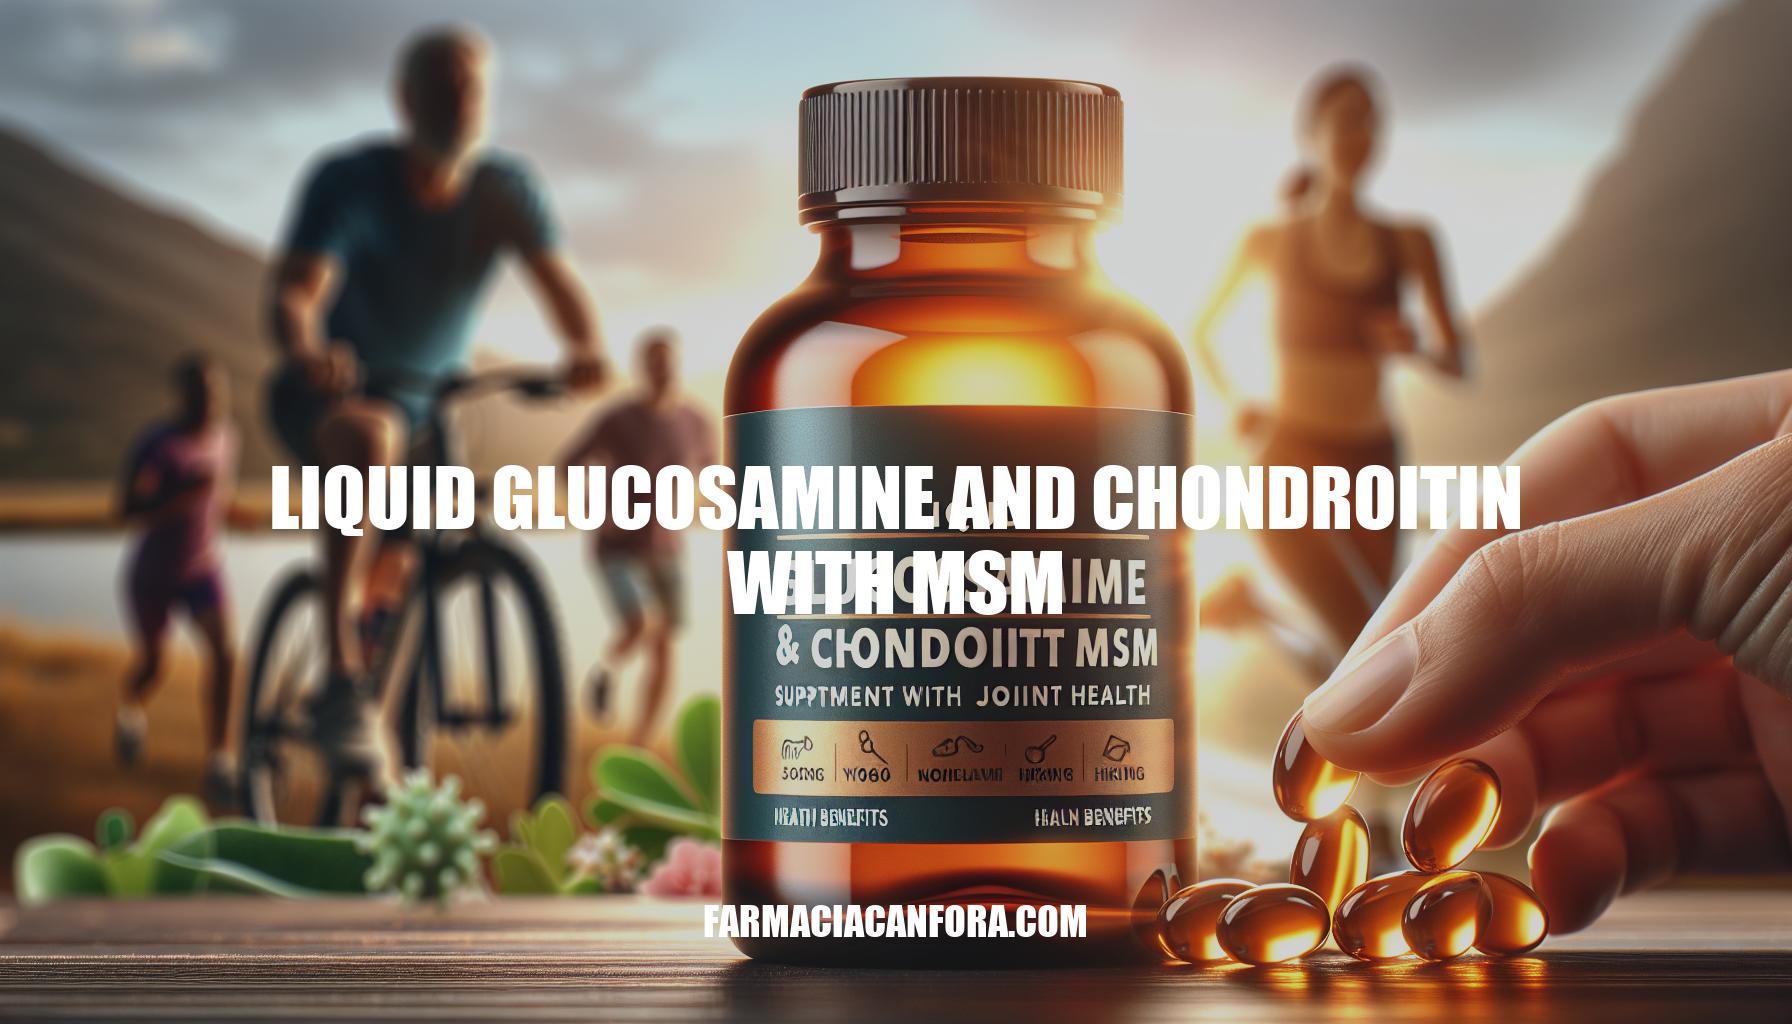 Liquid Glucosamine and Chondroitin with MSM Benefits